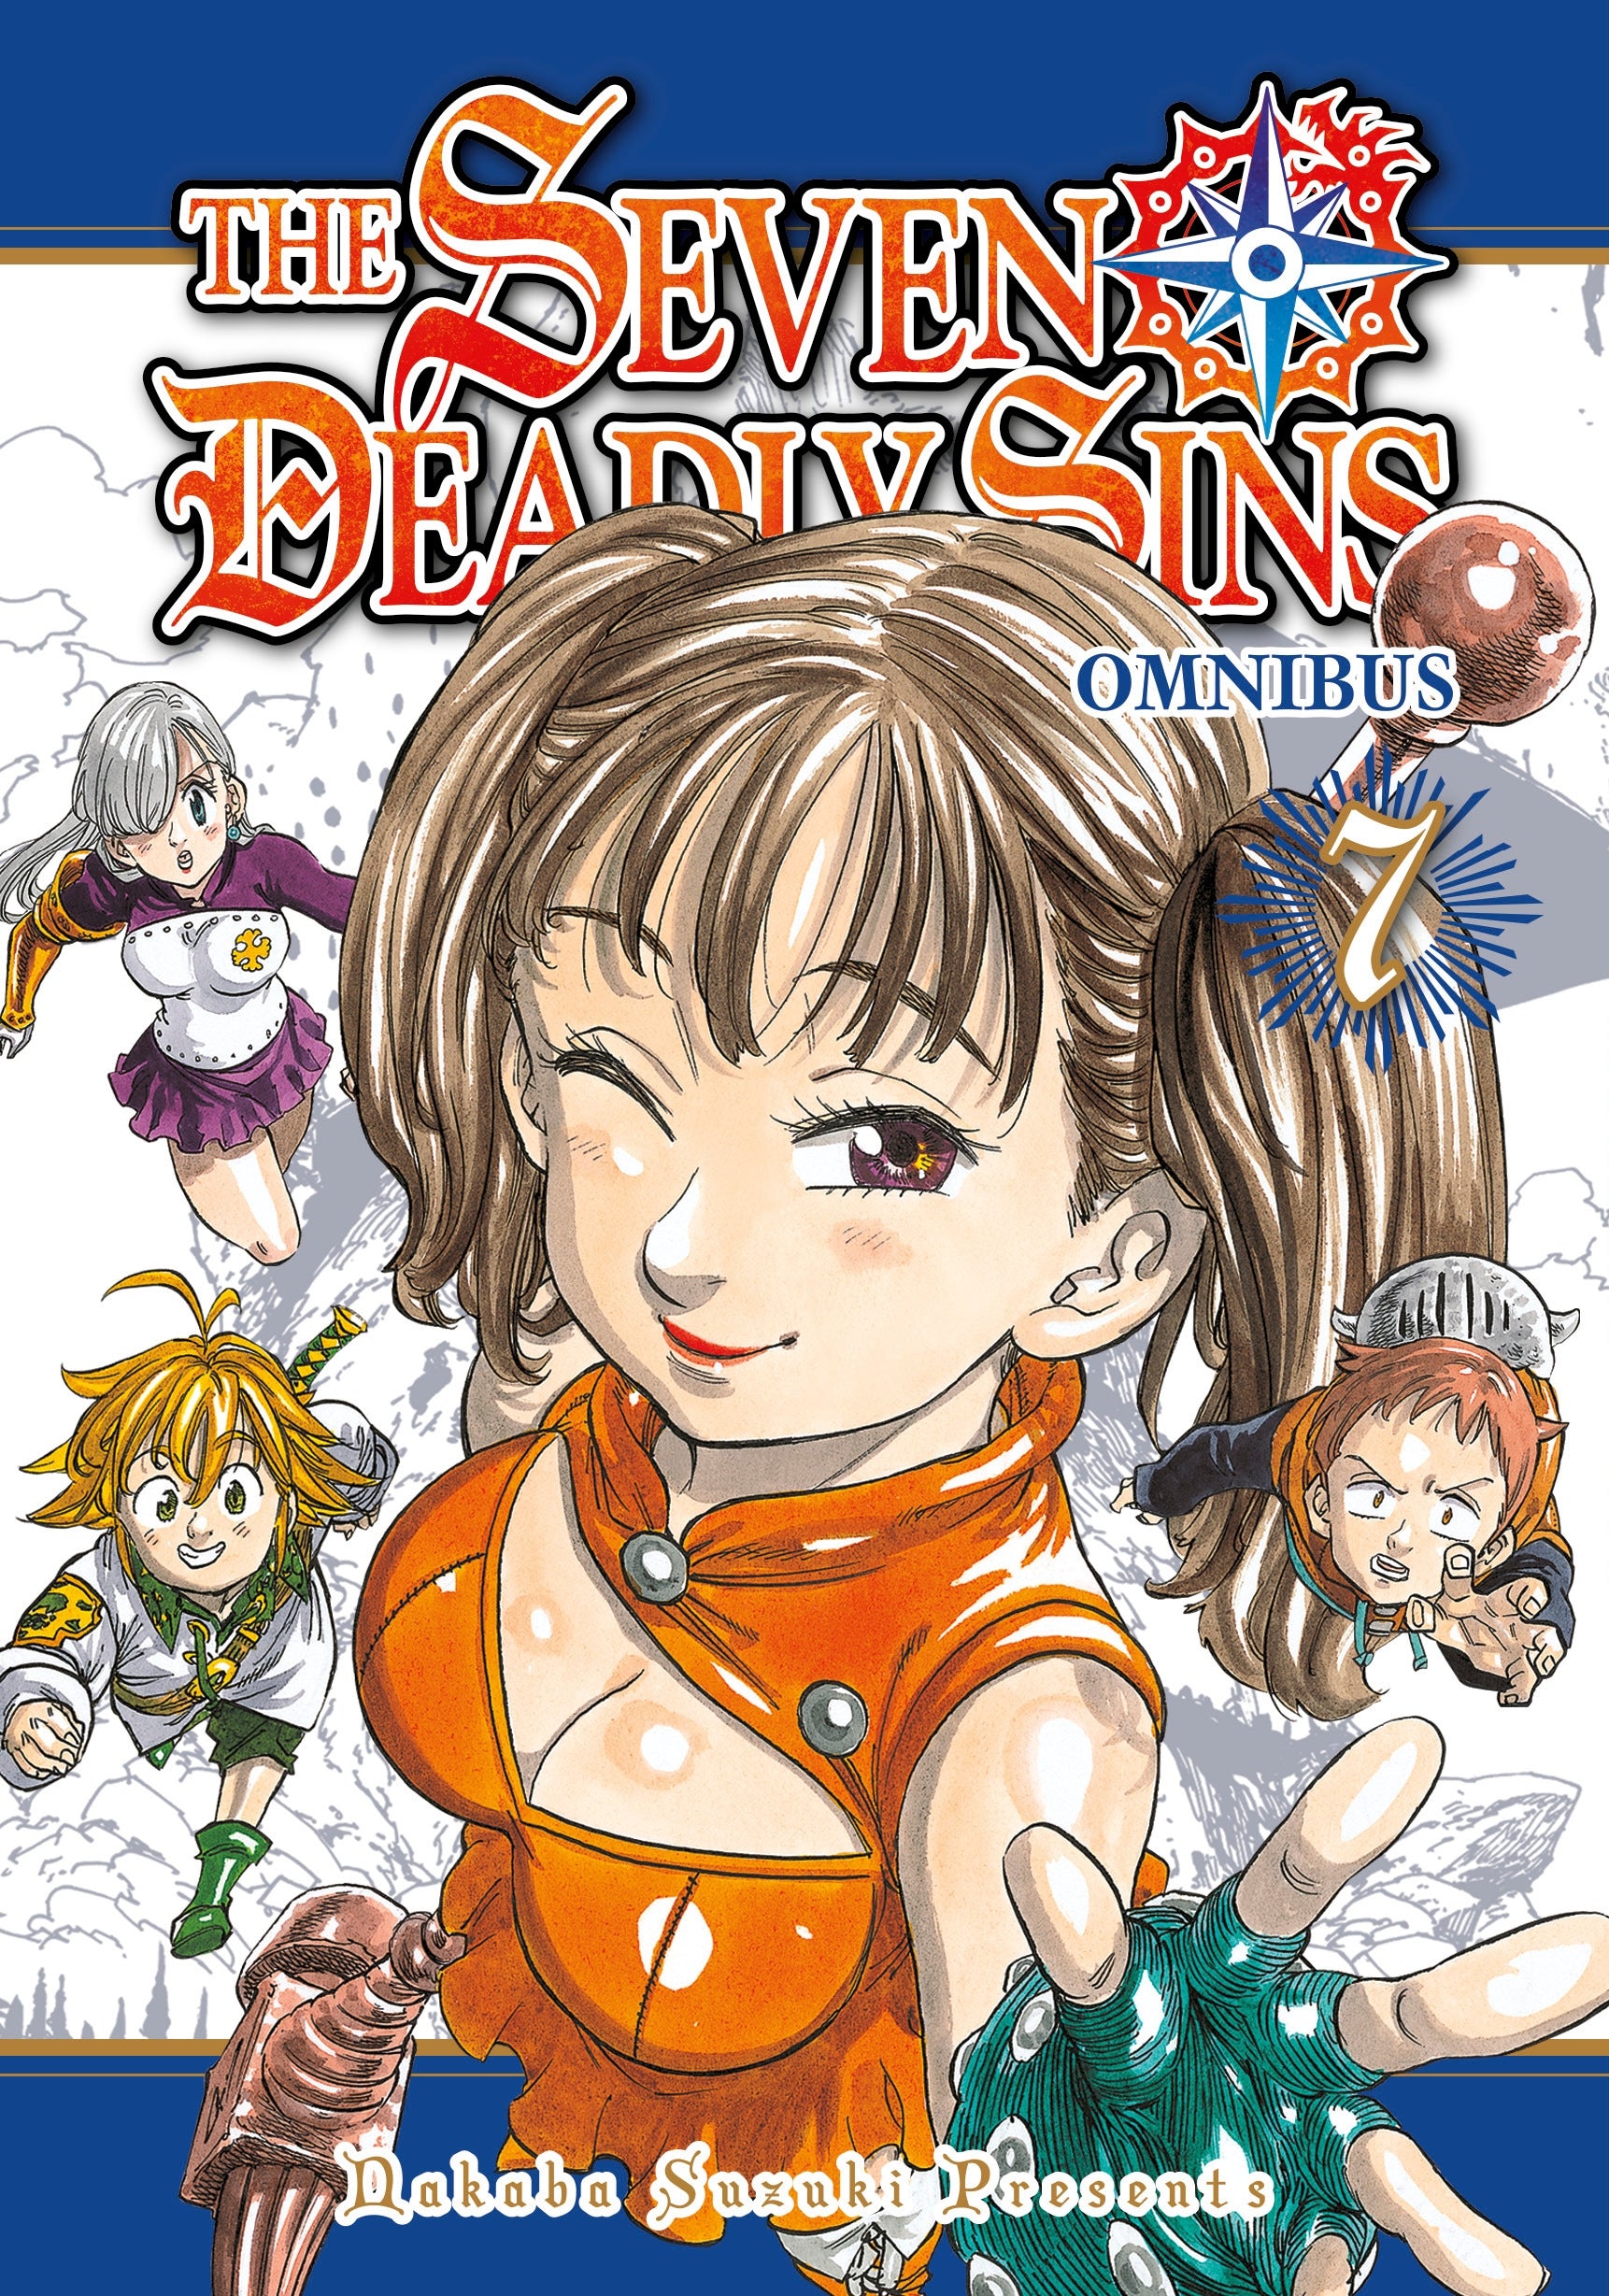 The Seven Deadly Sins - Omnibus 7 (Vol. 19-21)